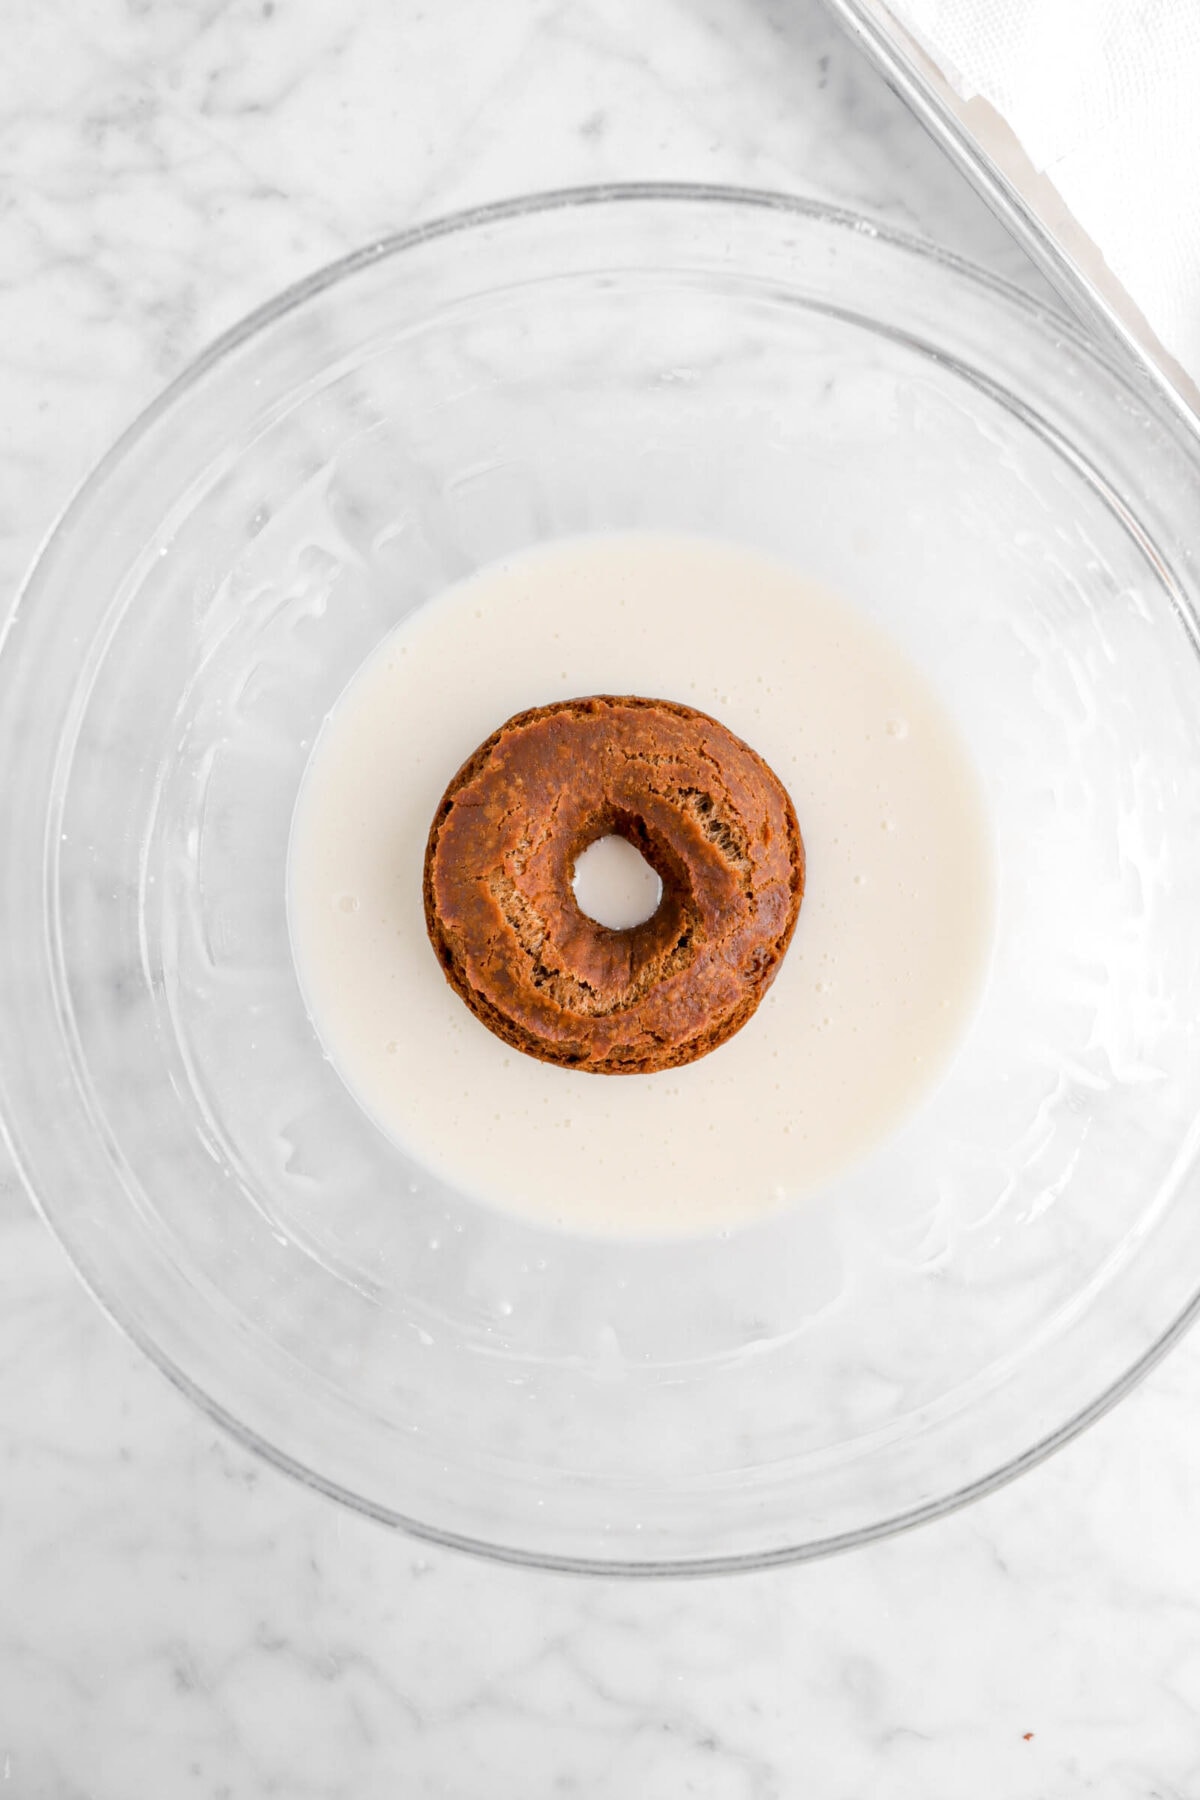 doughnut in bowl of glaze